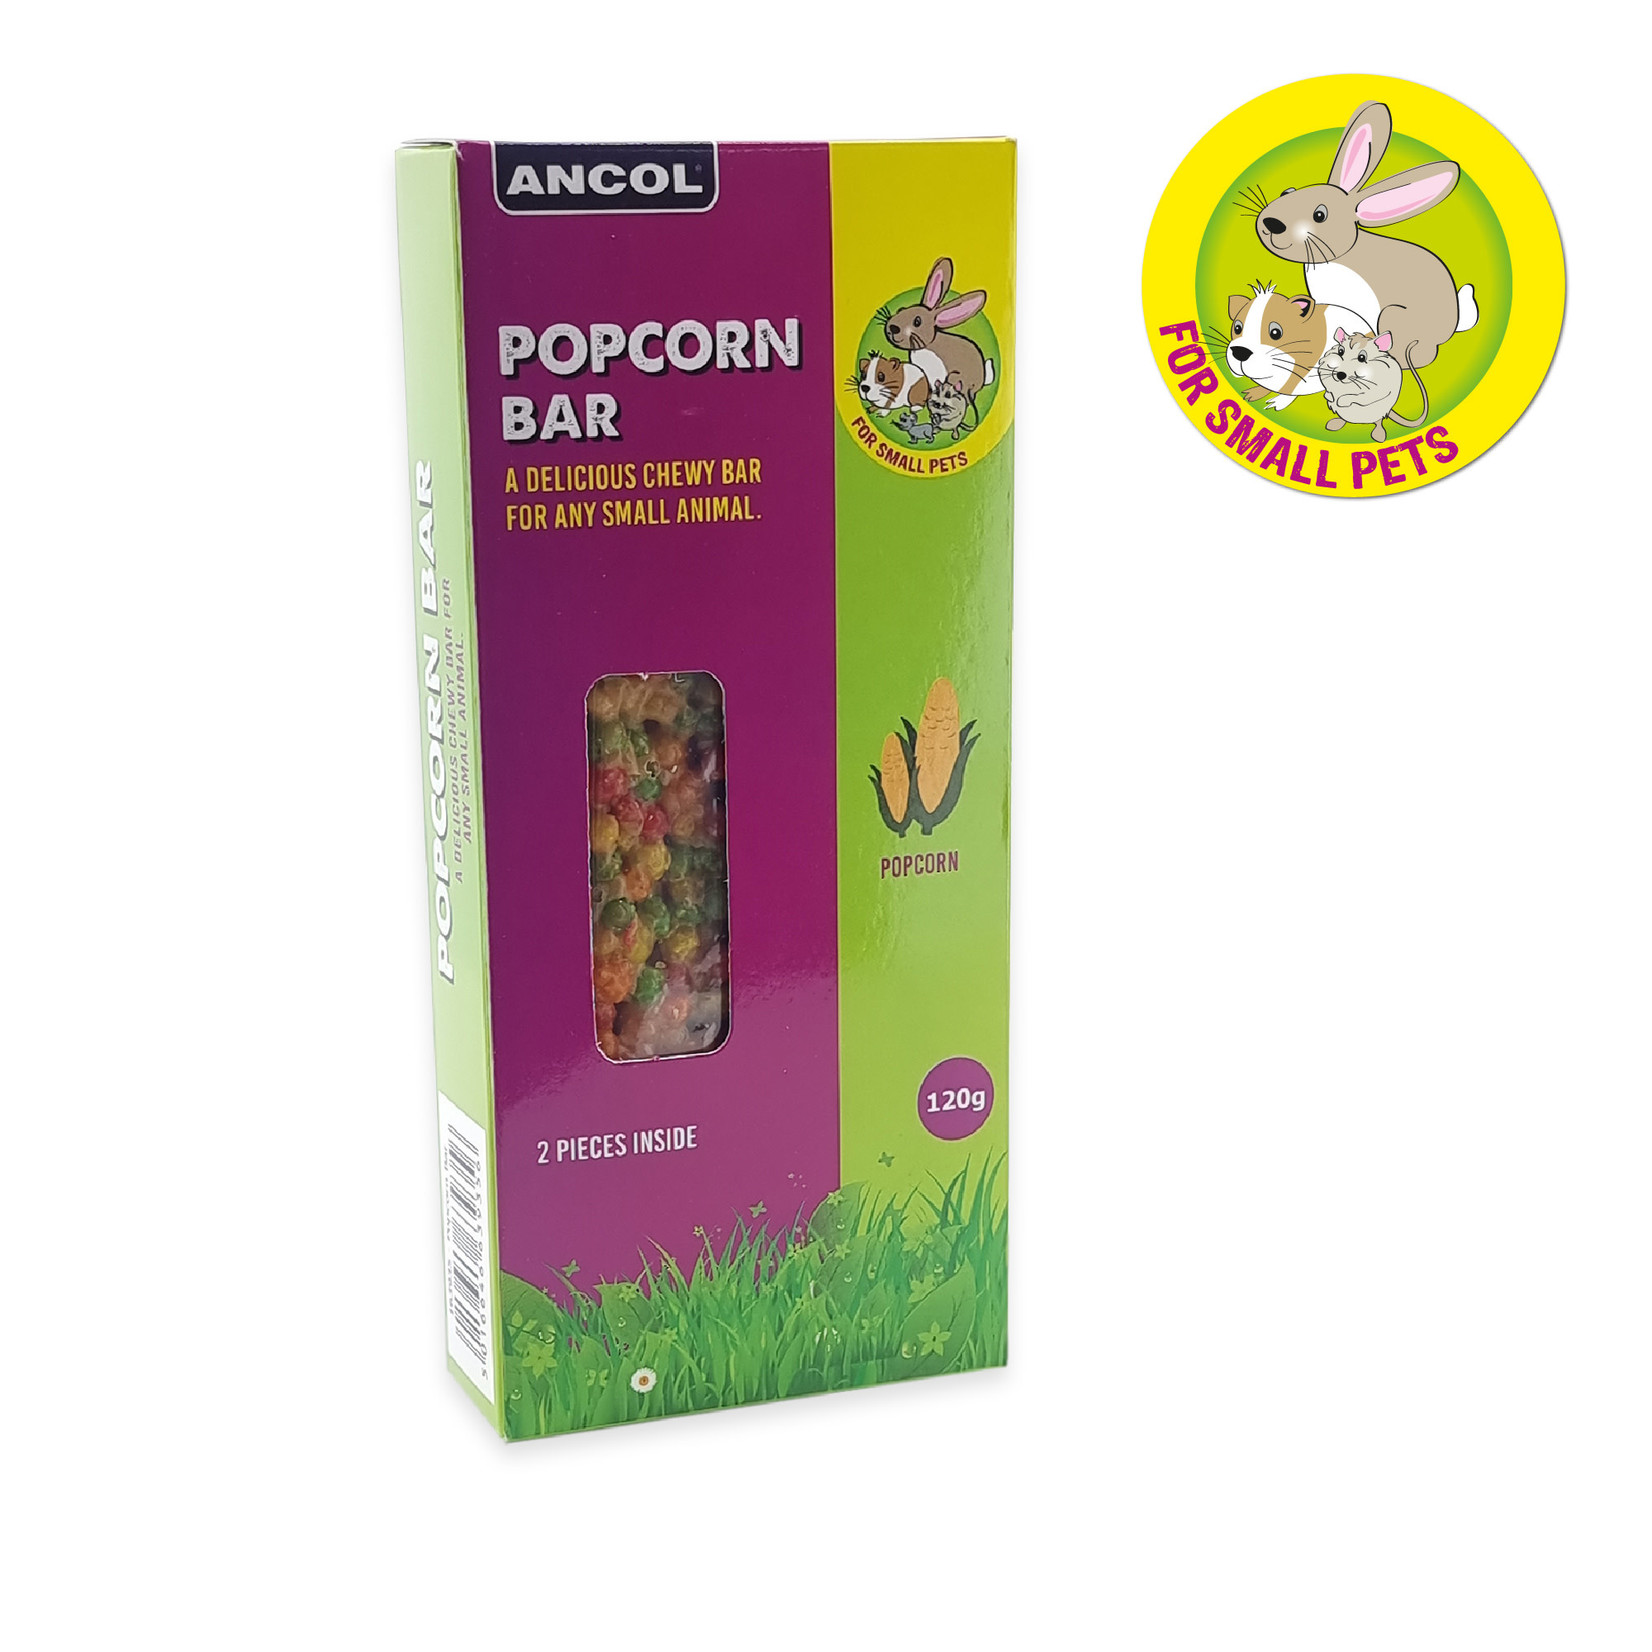 Ancol Popcorn Bar Chewy Small Animal Treat, 120g